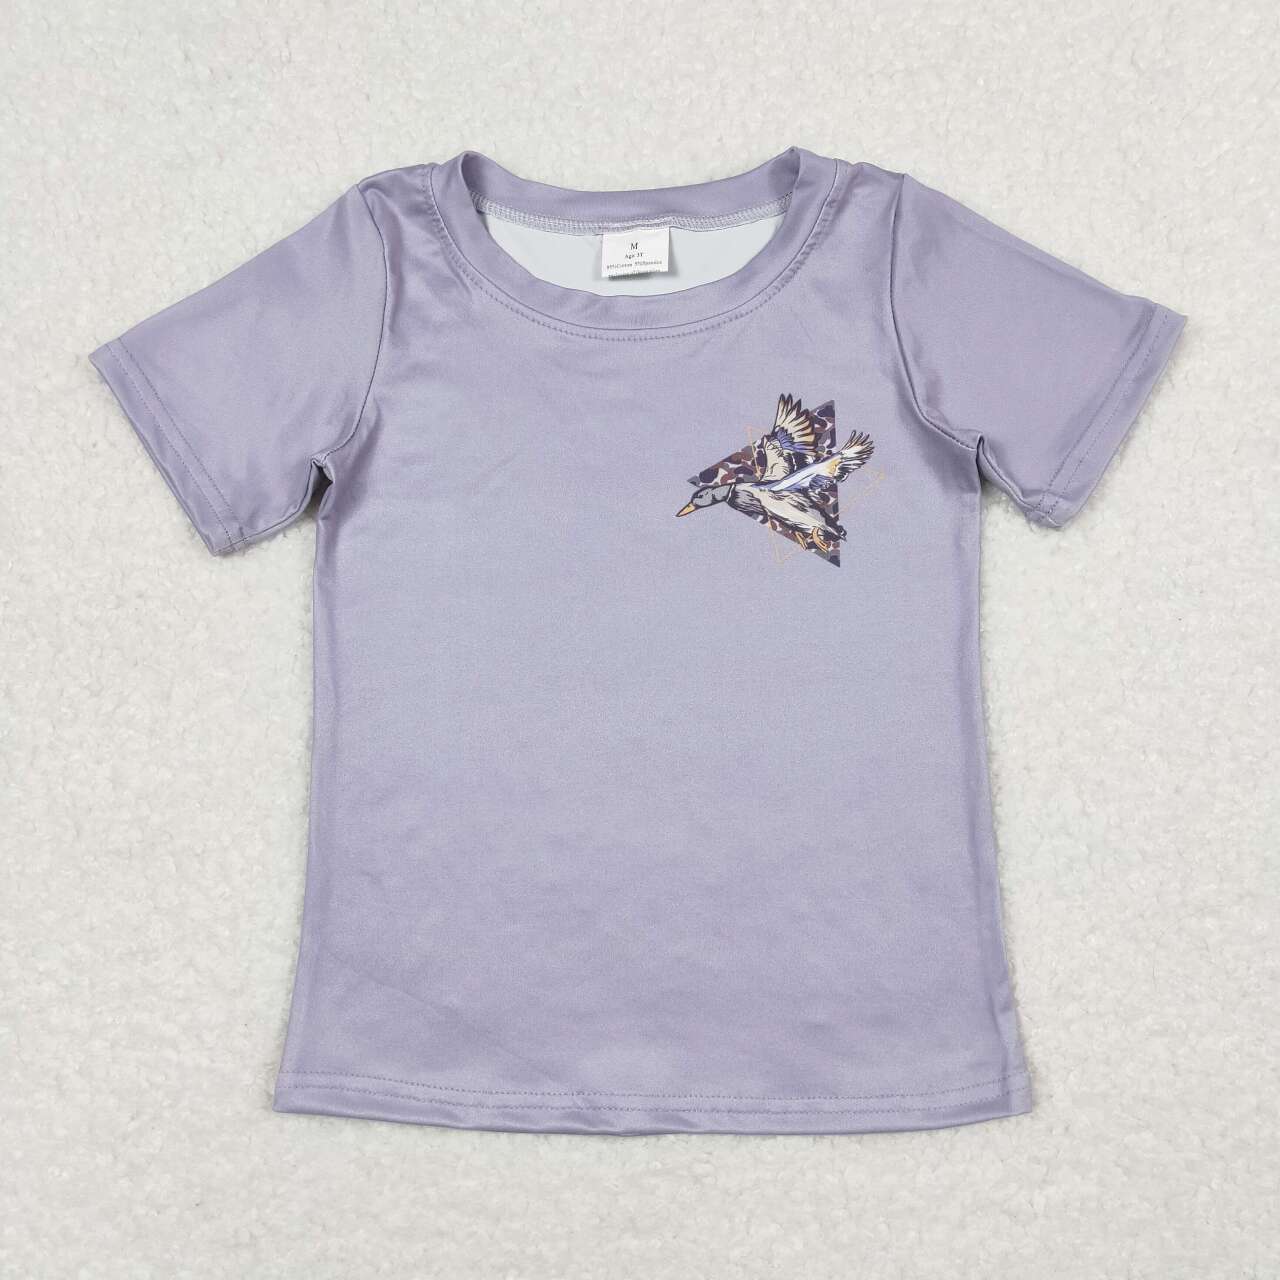 BT0599  Camo Duck Grey Print Boys Summer Tee Shirts Top